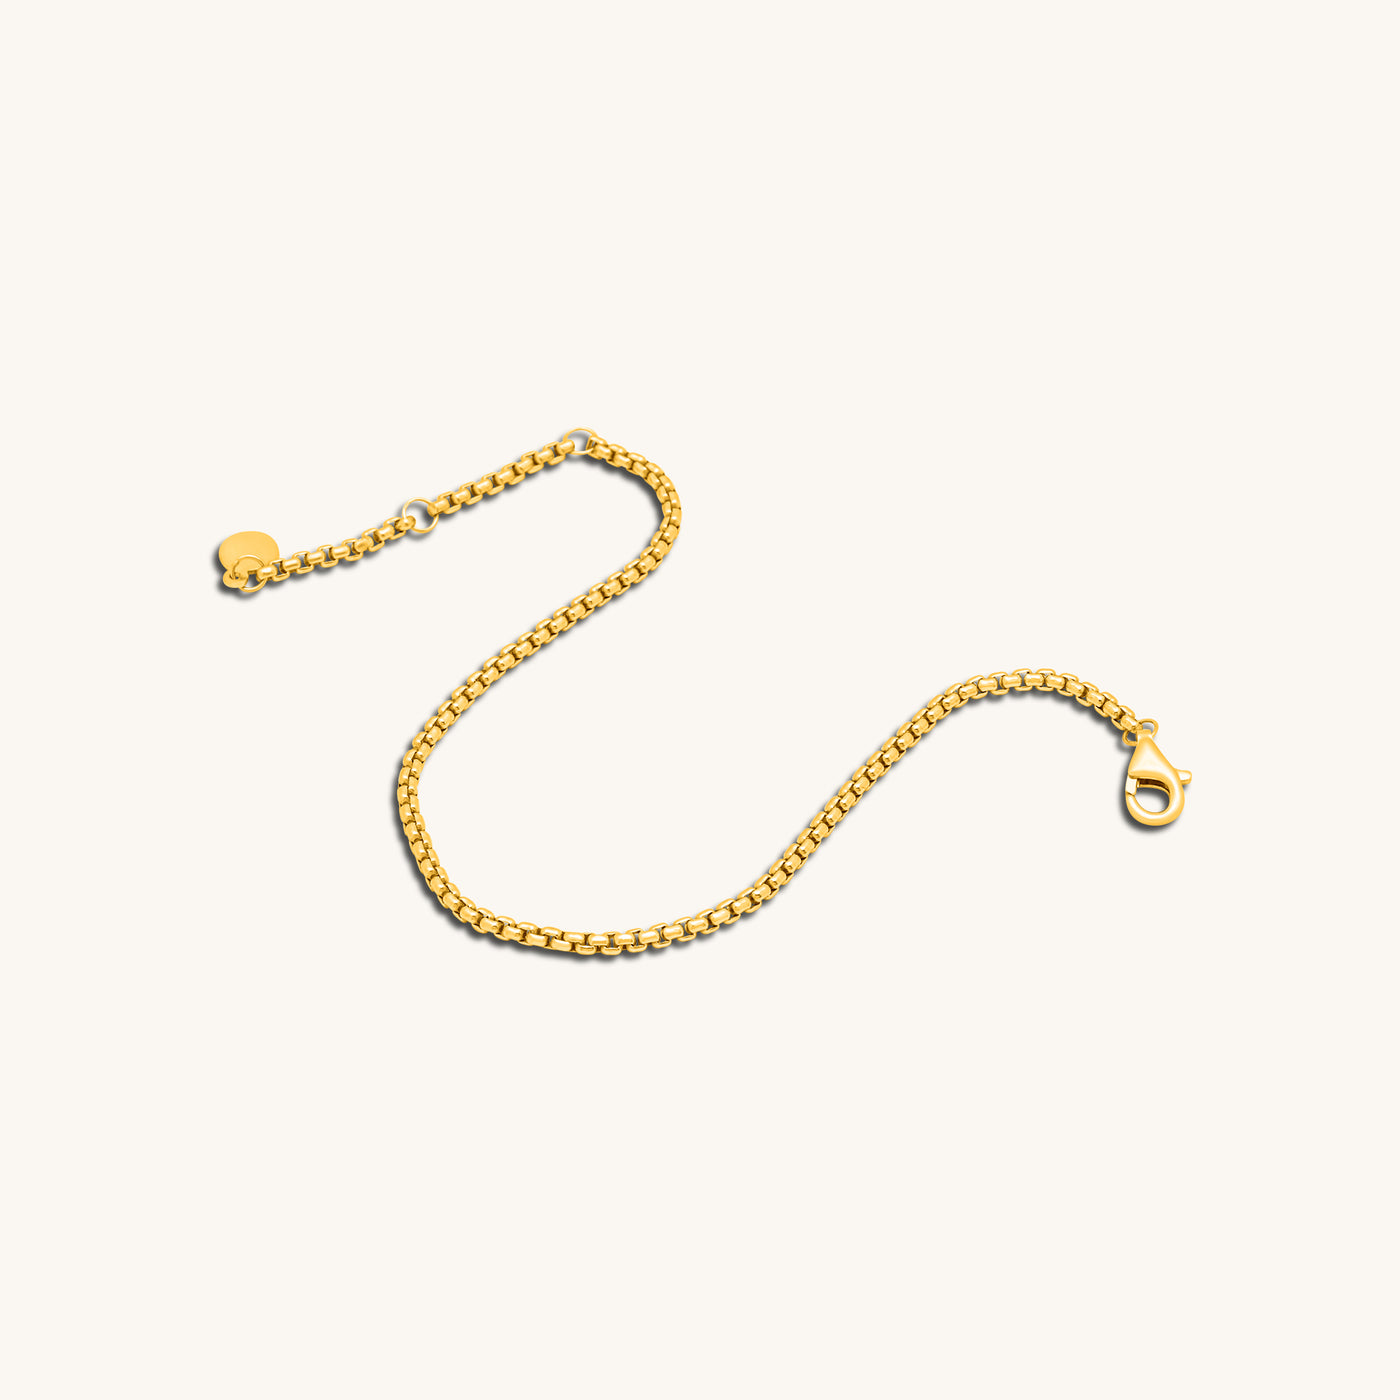  Modern Simple Minimalist Jewelry Women's Bracelet round box chain 18k Gold Layered on 925 Sterling Silver  